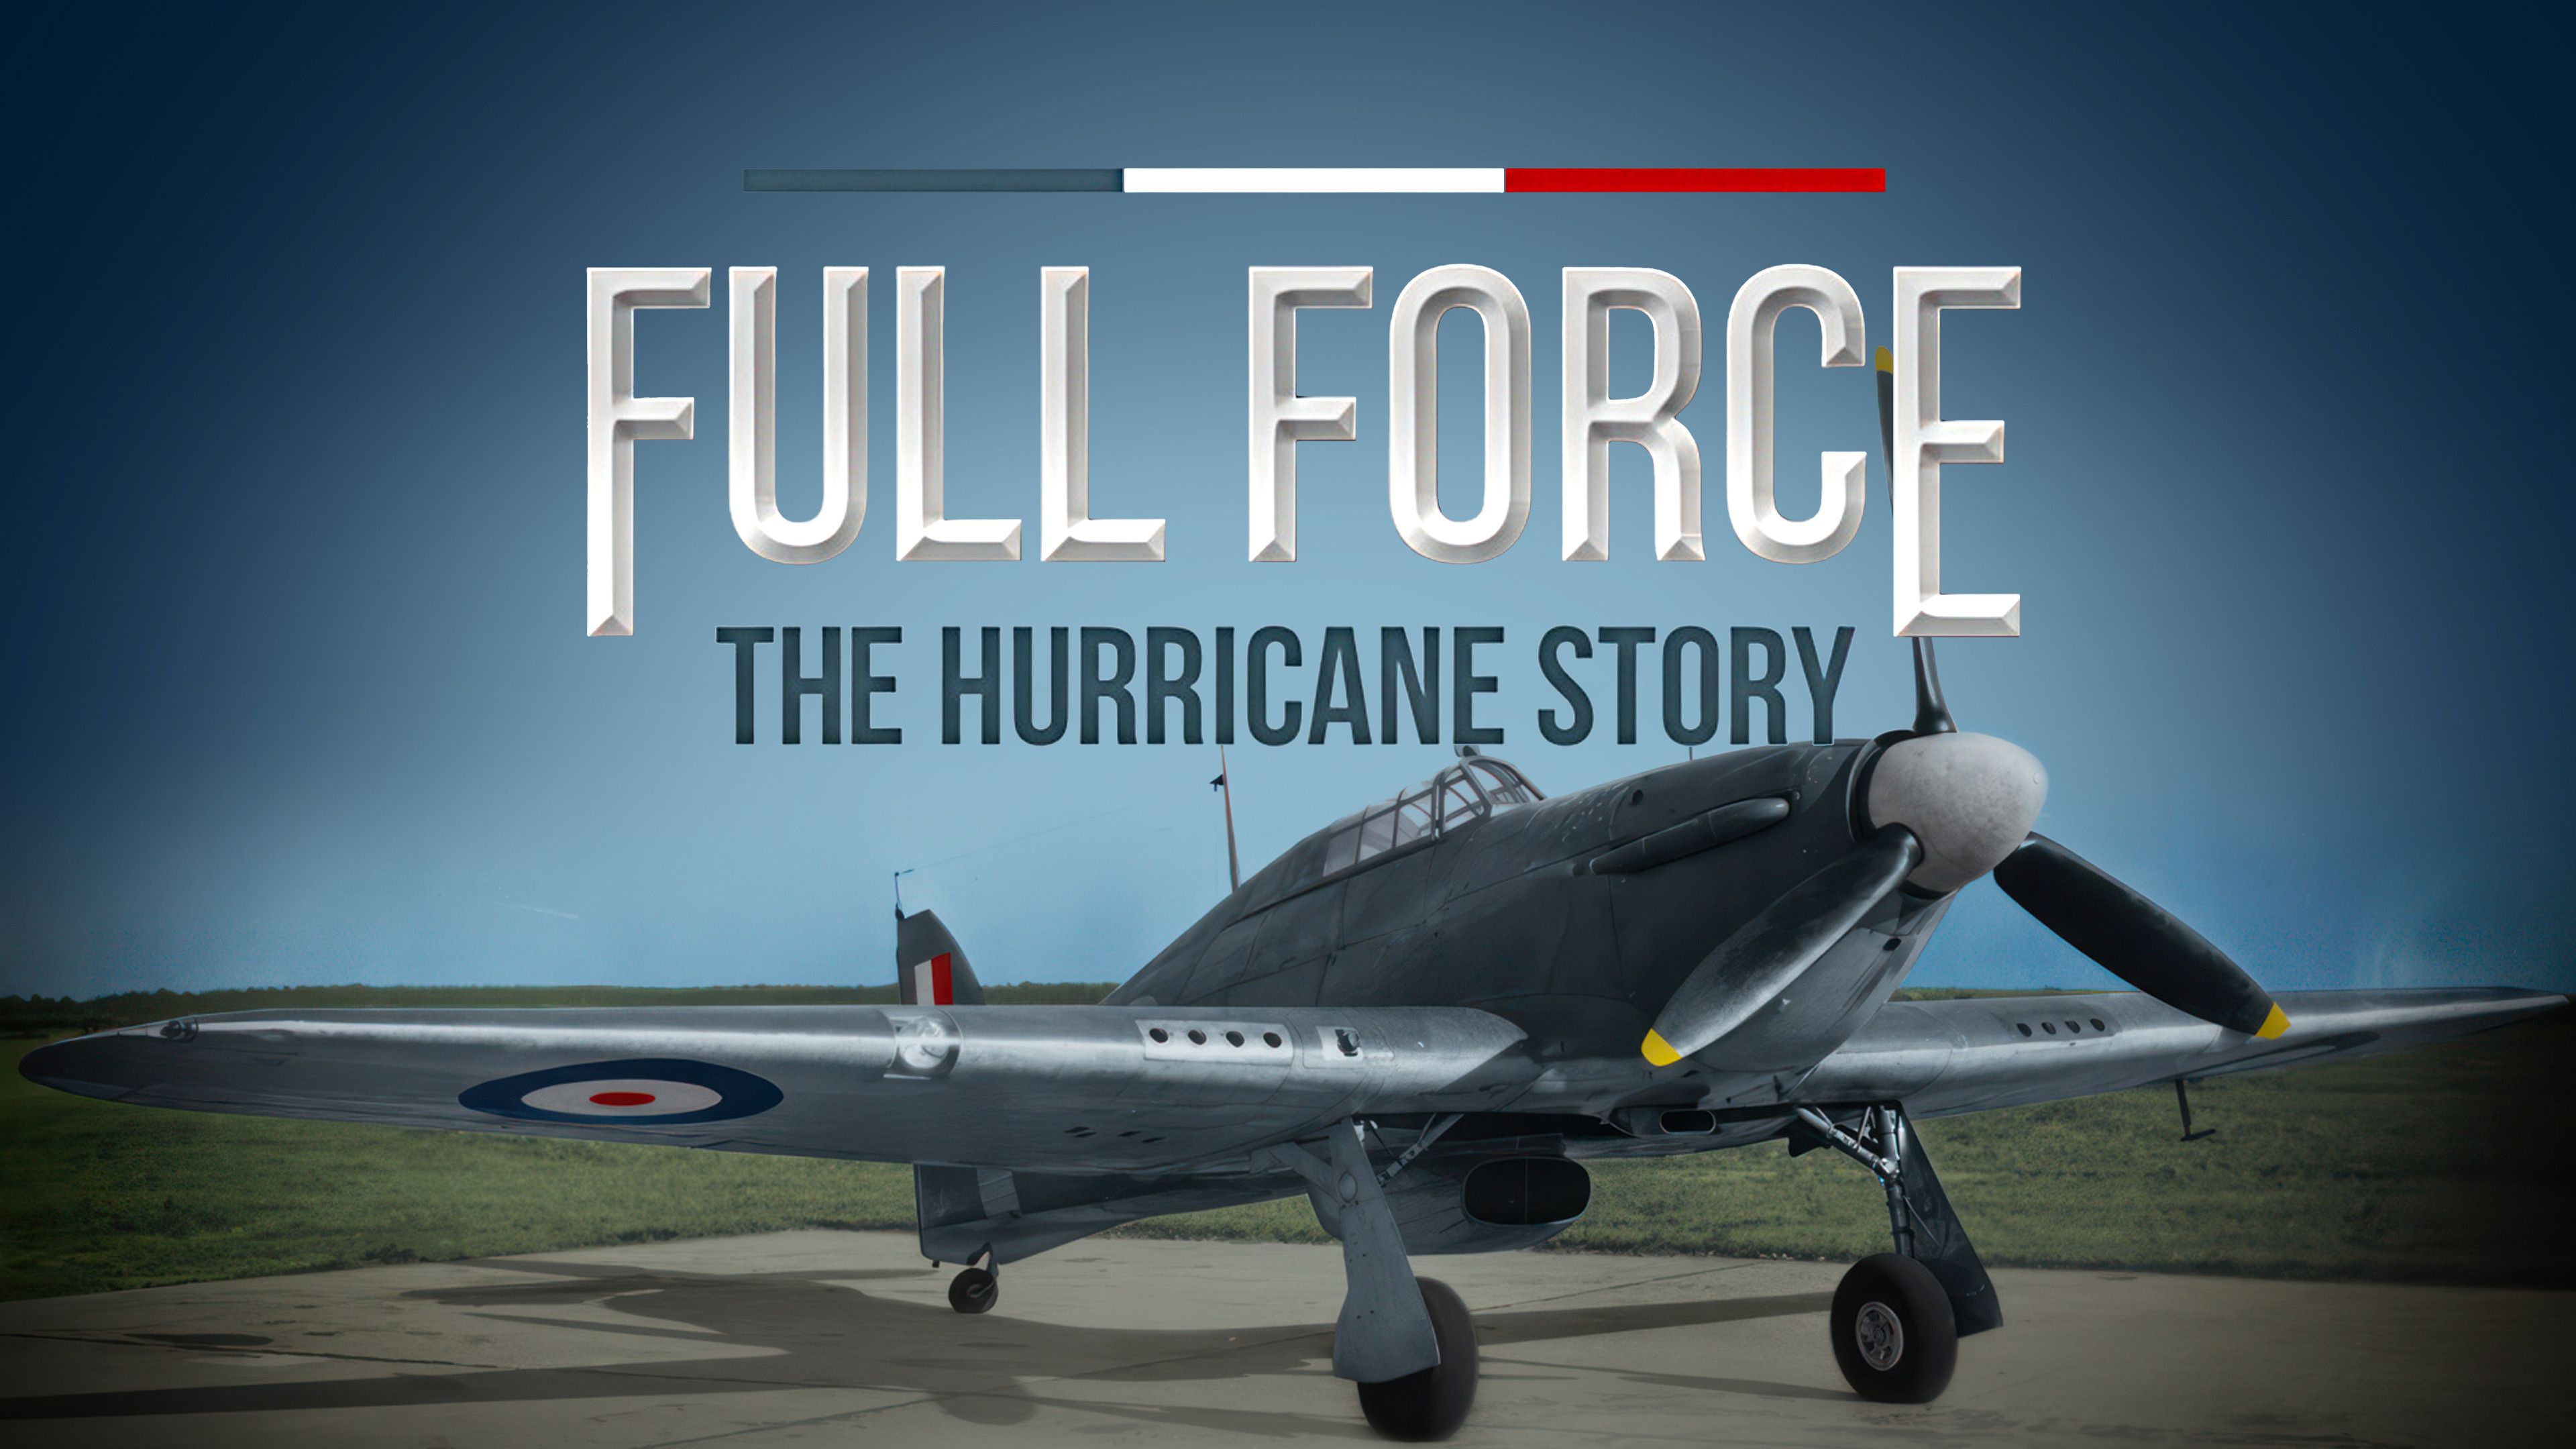 Full Force: The Hurricane Story